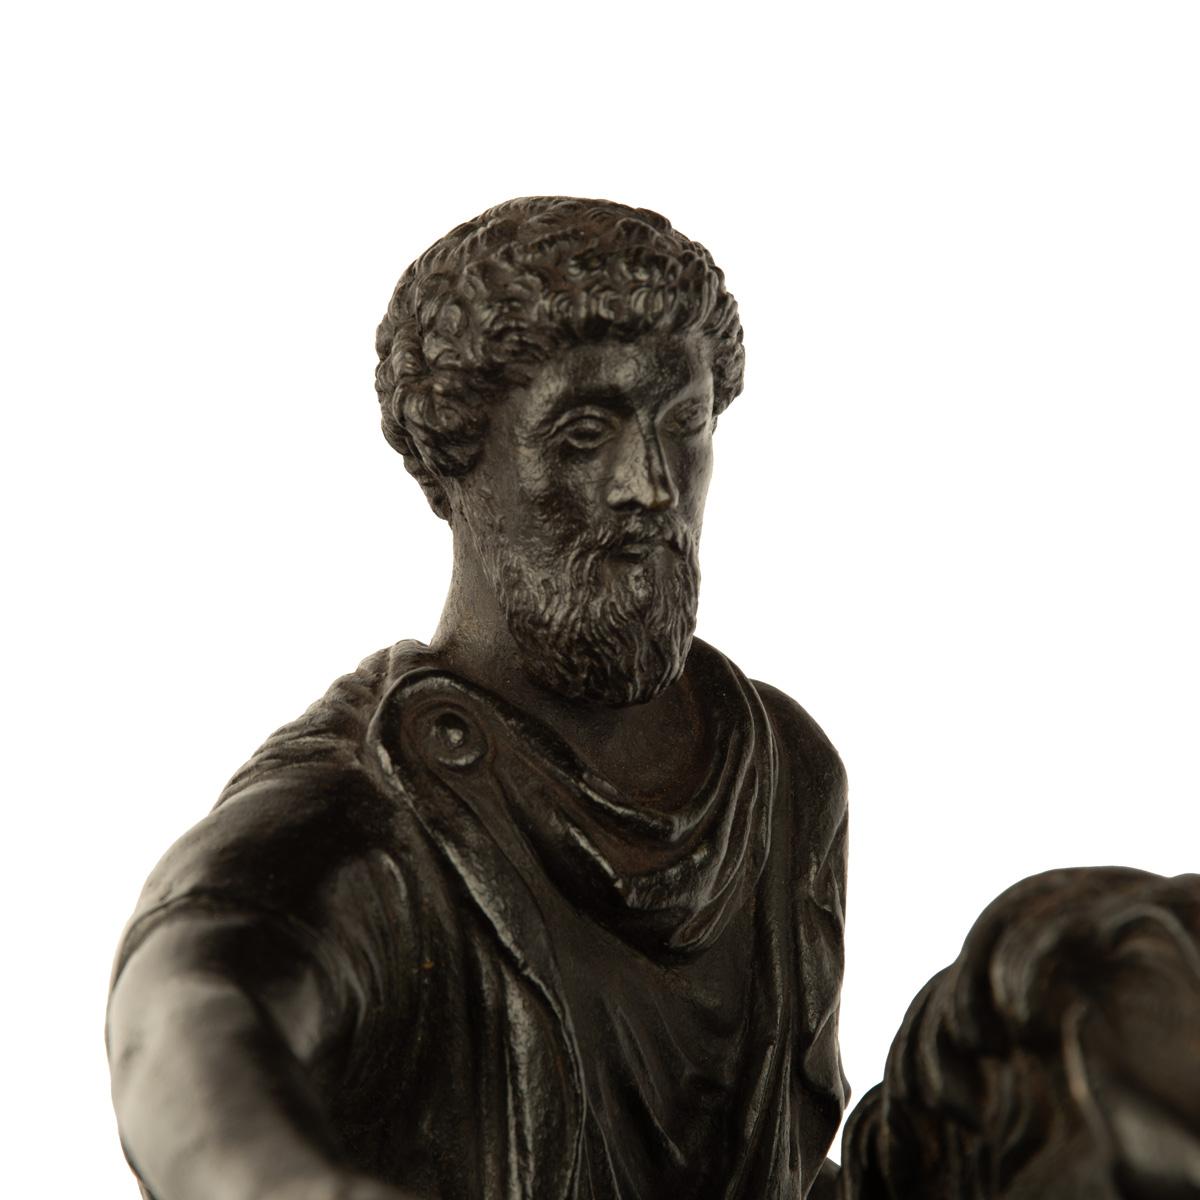 Italian A Grand Tour equestrian bronze of Marcus Aurelius, after Hopfgarten